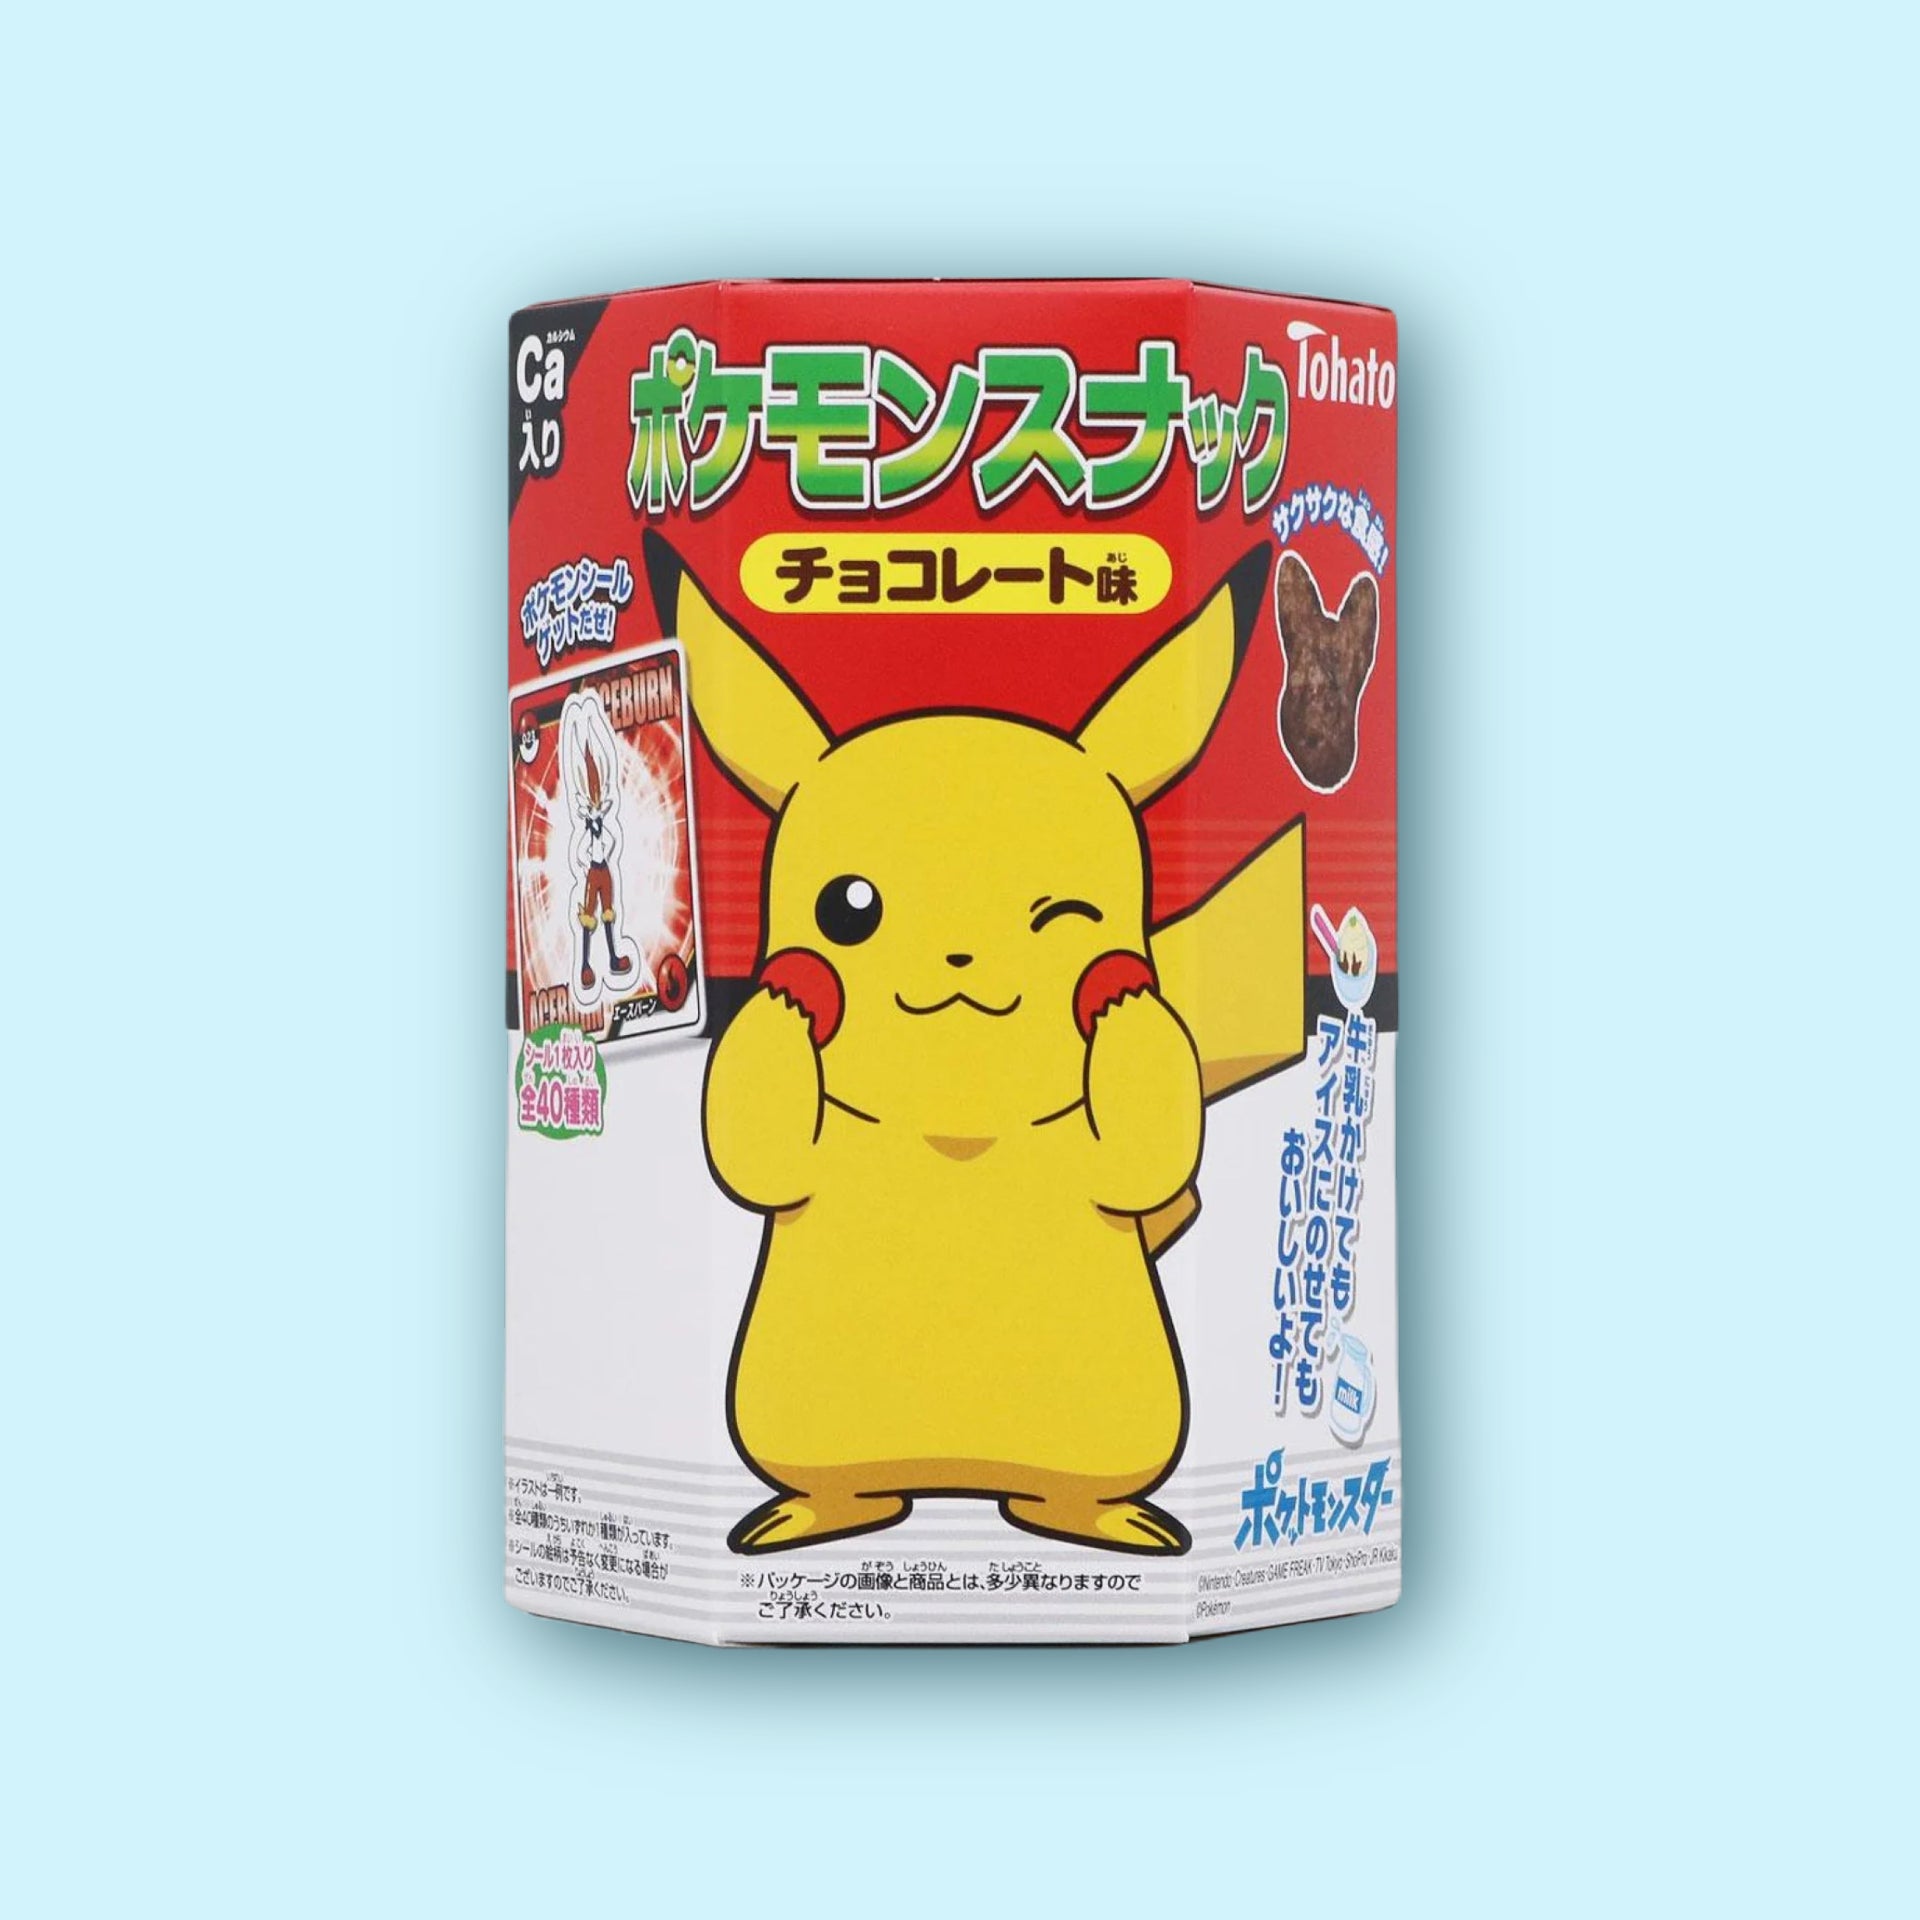 Tohato Pokemon Chocolate Snack (Japan)